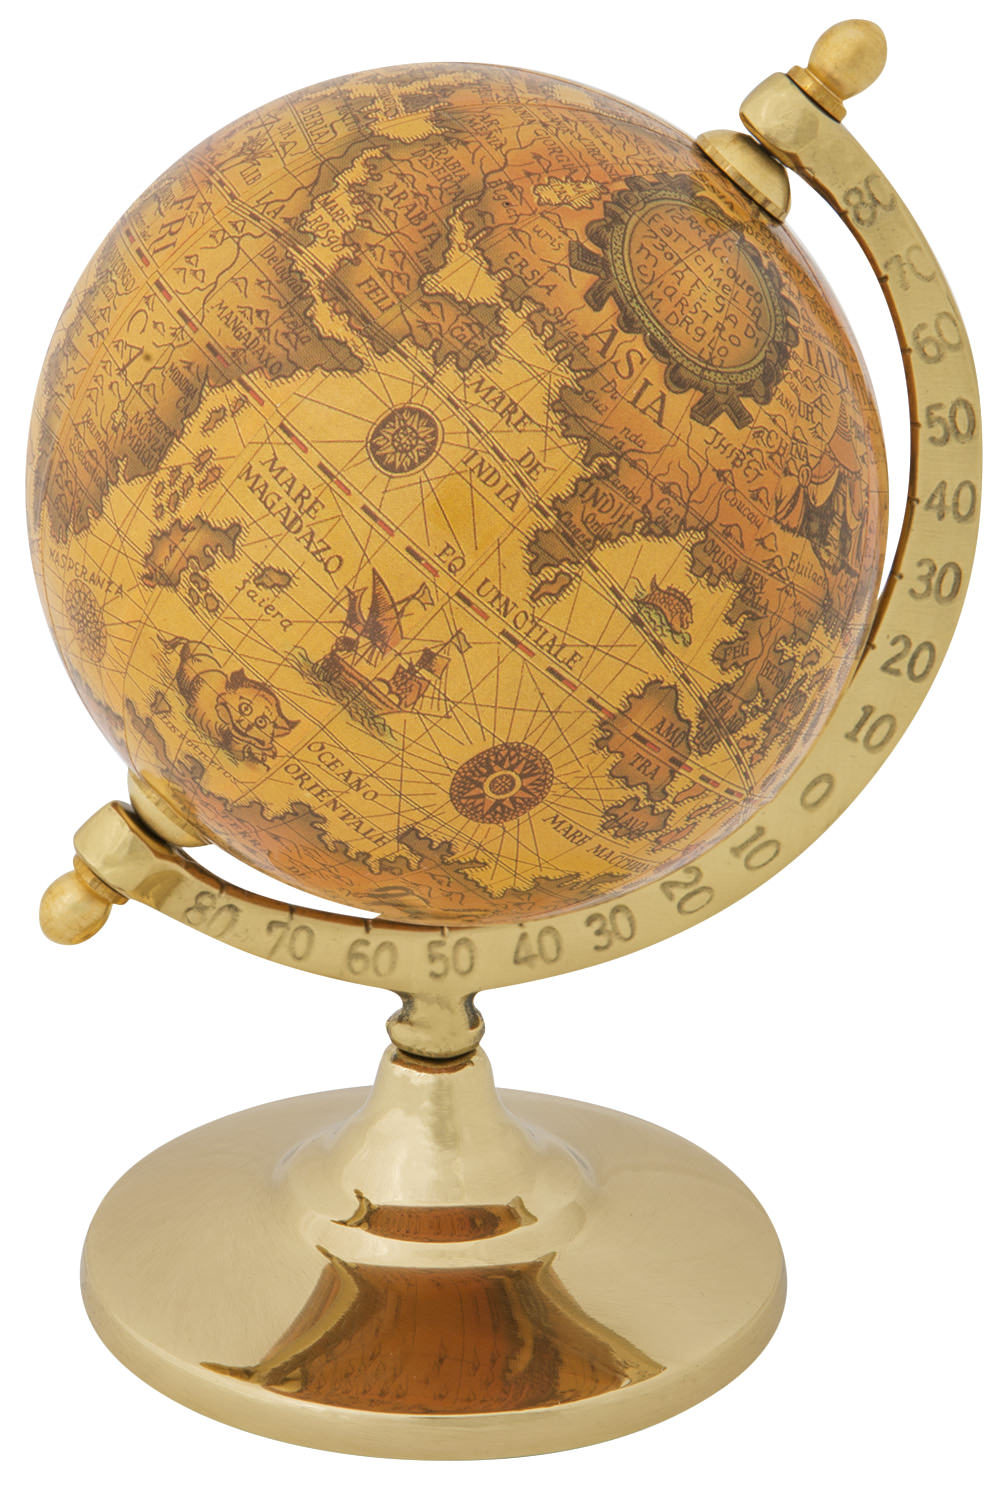 Deko Globus Antik Look Dekoration Maritim Weltkugel Atlas Karte 7 Metall gold 